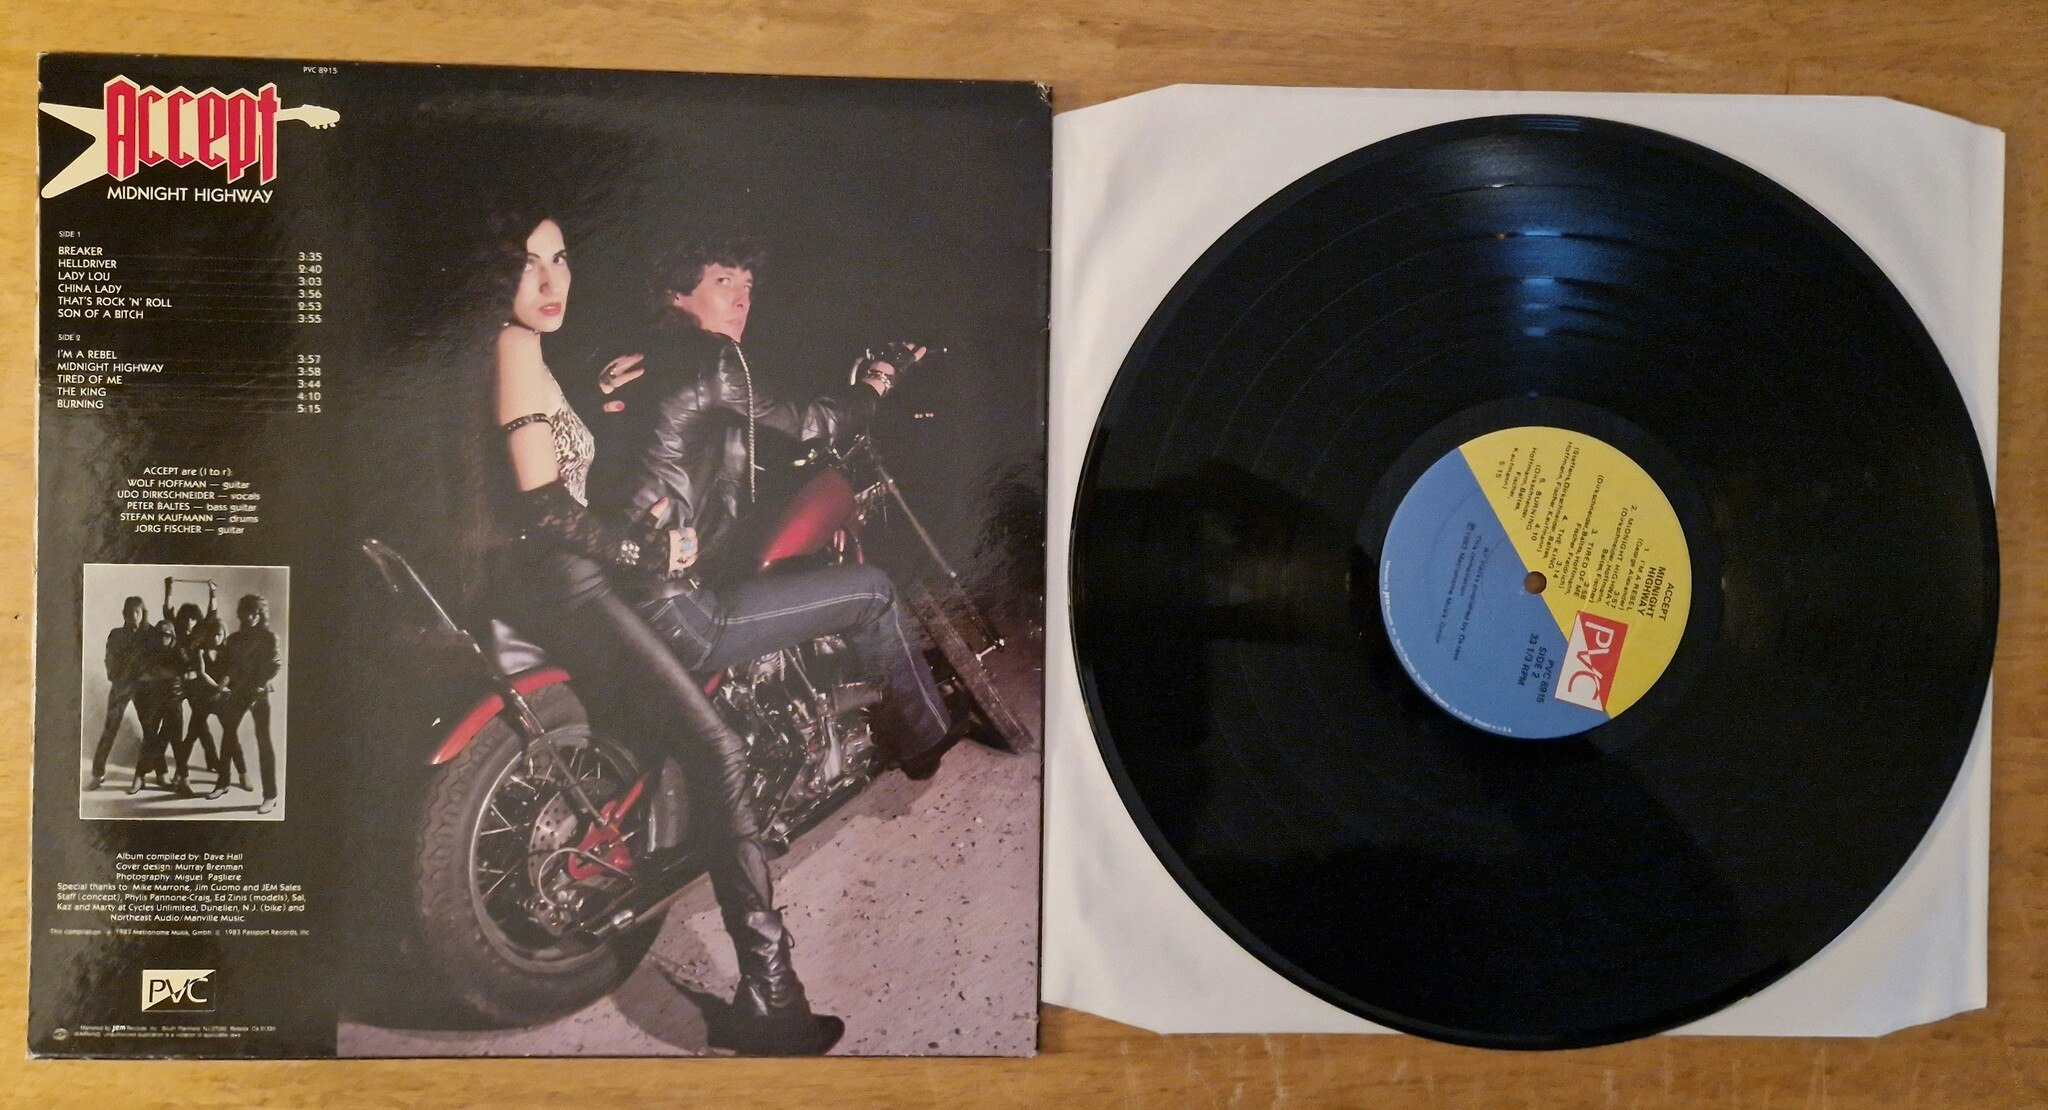 Accept, Midnight highway. Vinyl LP